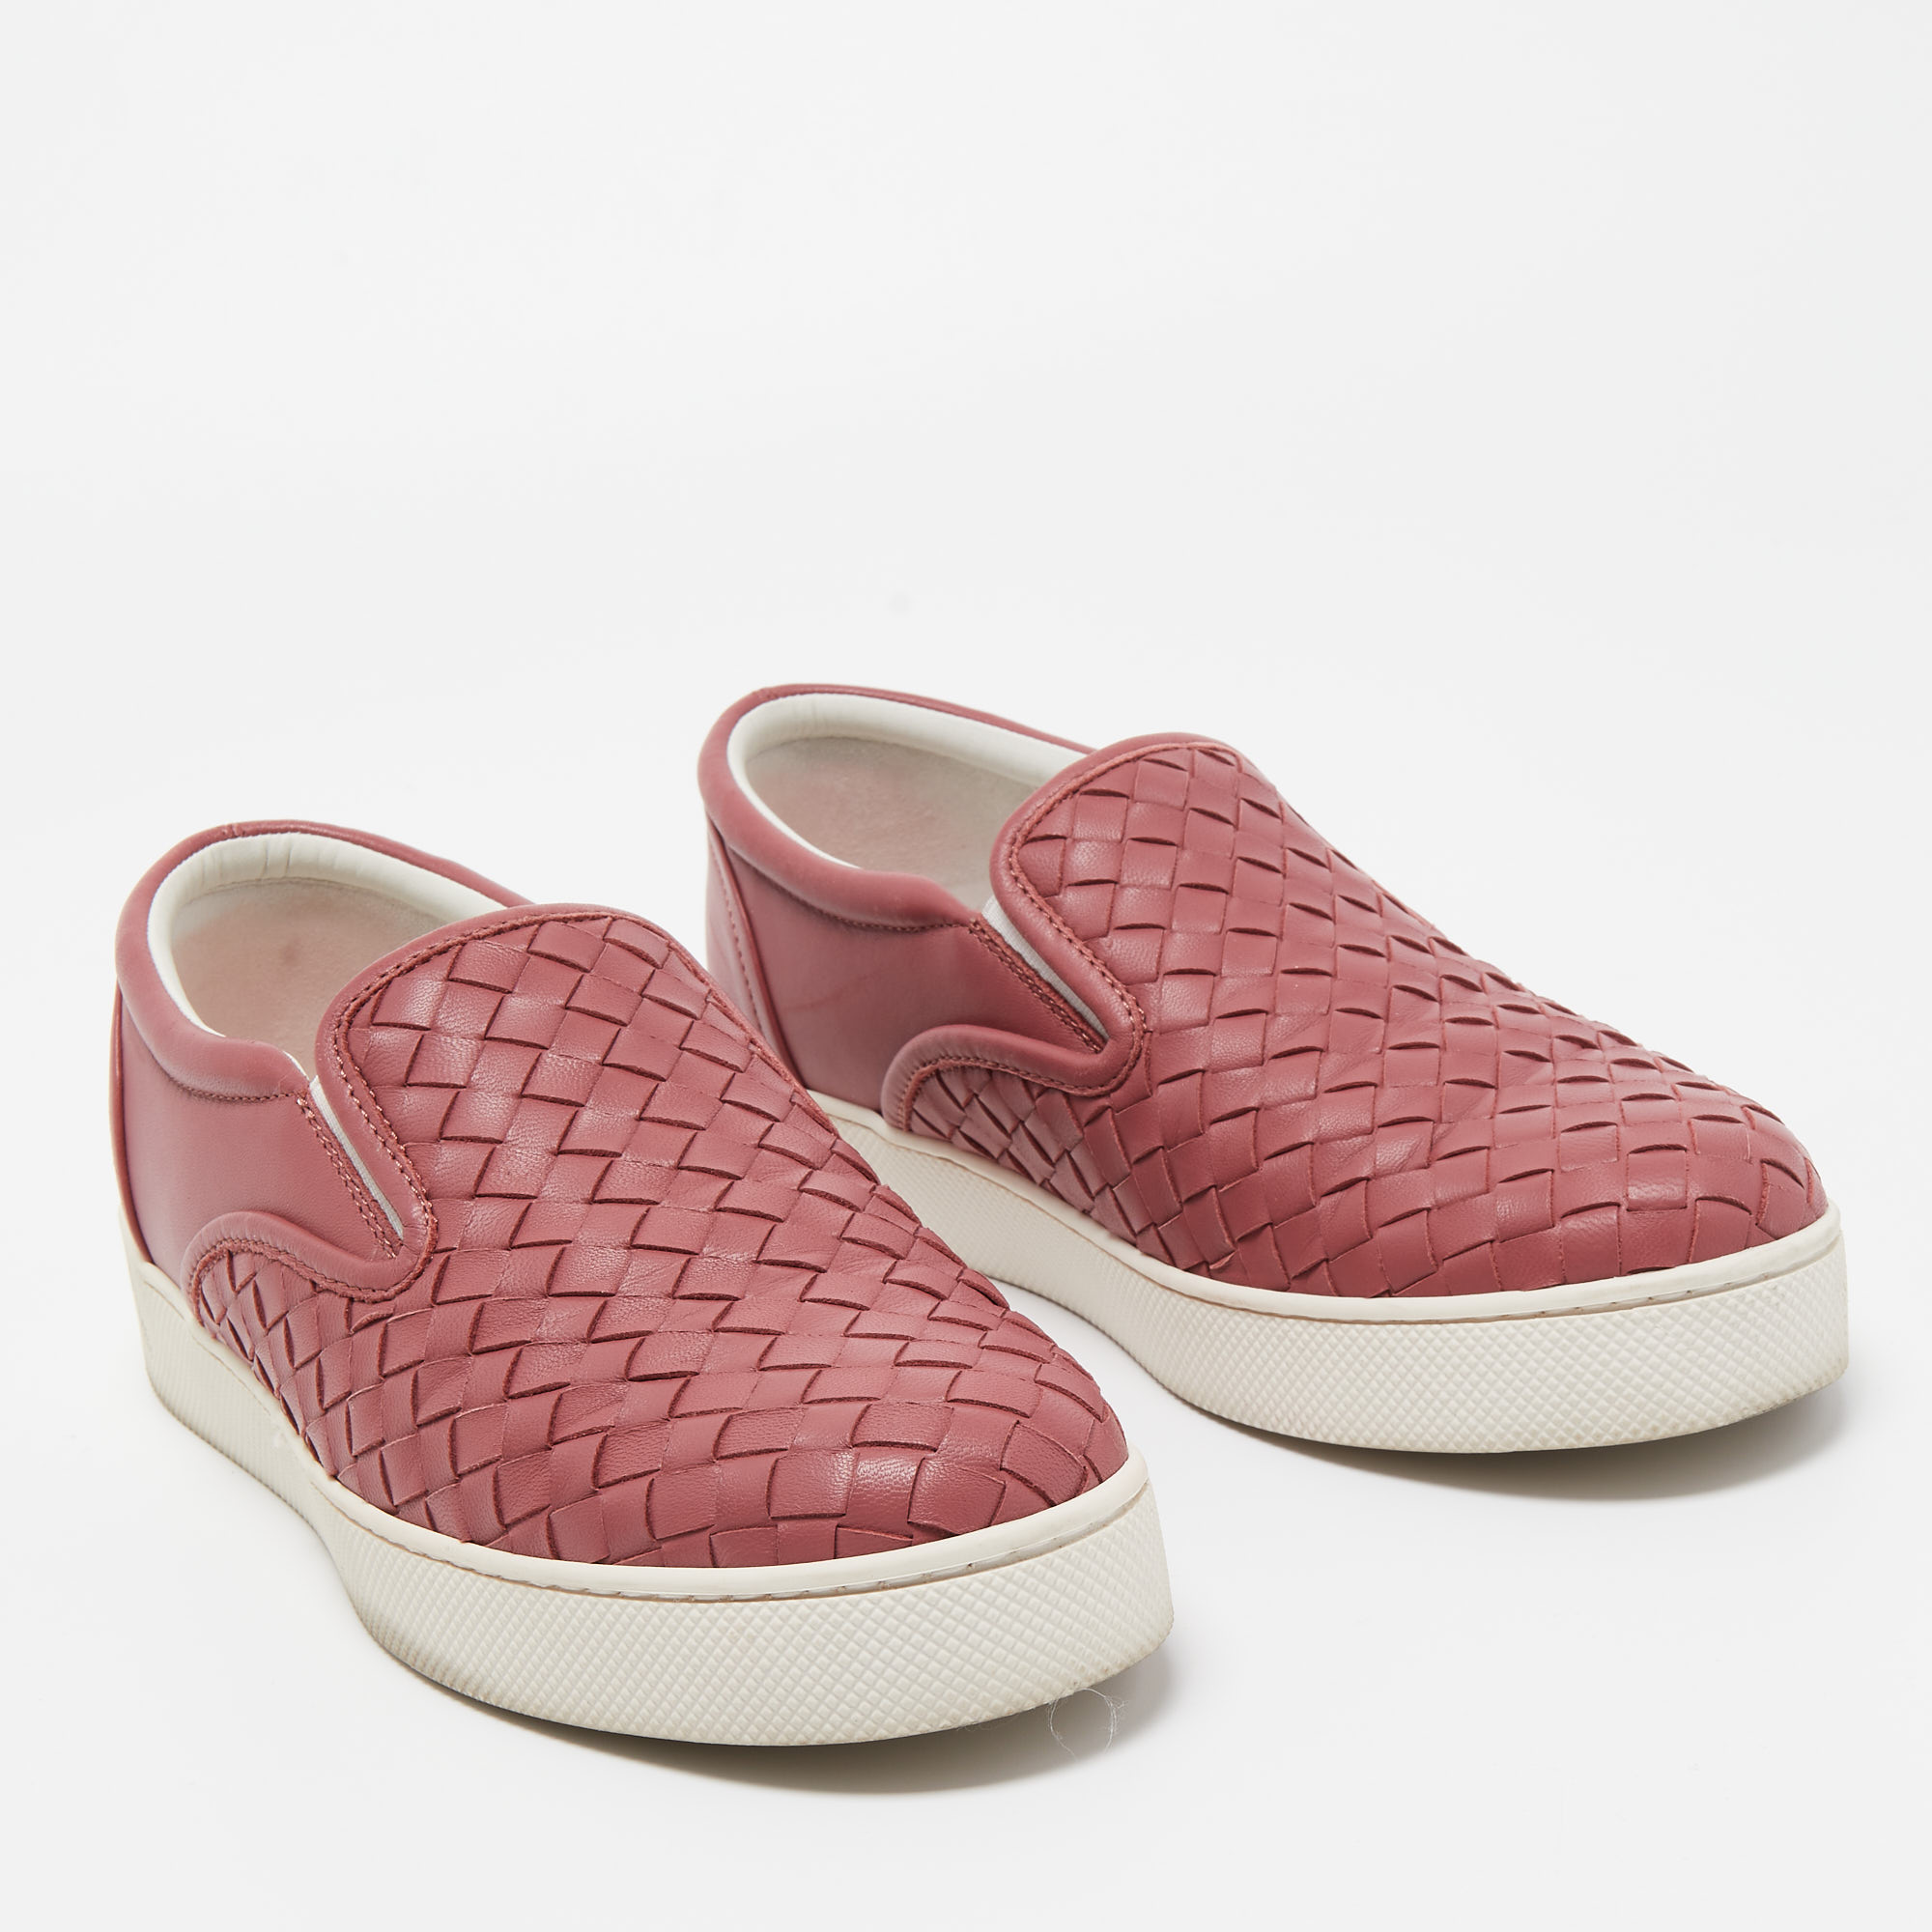 Bottega Veneta Pink Intrecciato Leather Slip On Sneakers Size 38